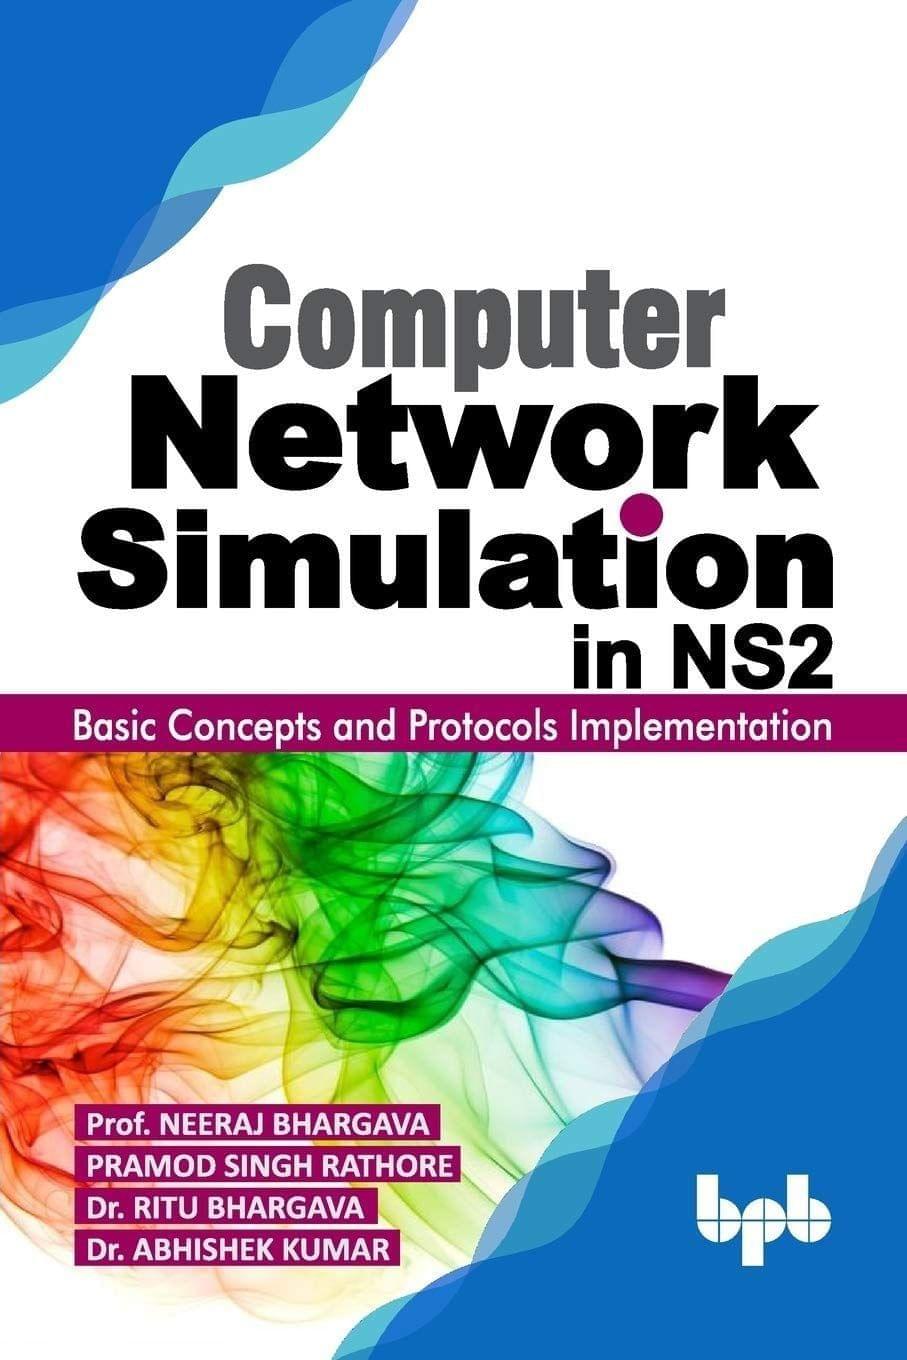 Computer Network simulation in NS2 [Paperback] Bhargava, Neeraj